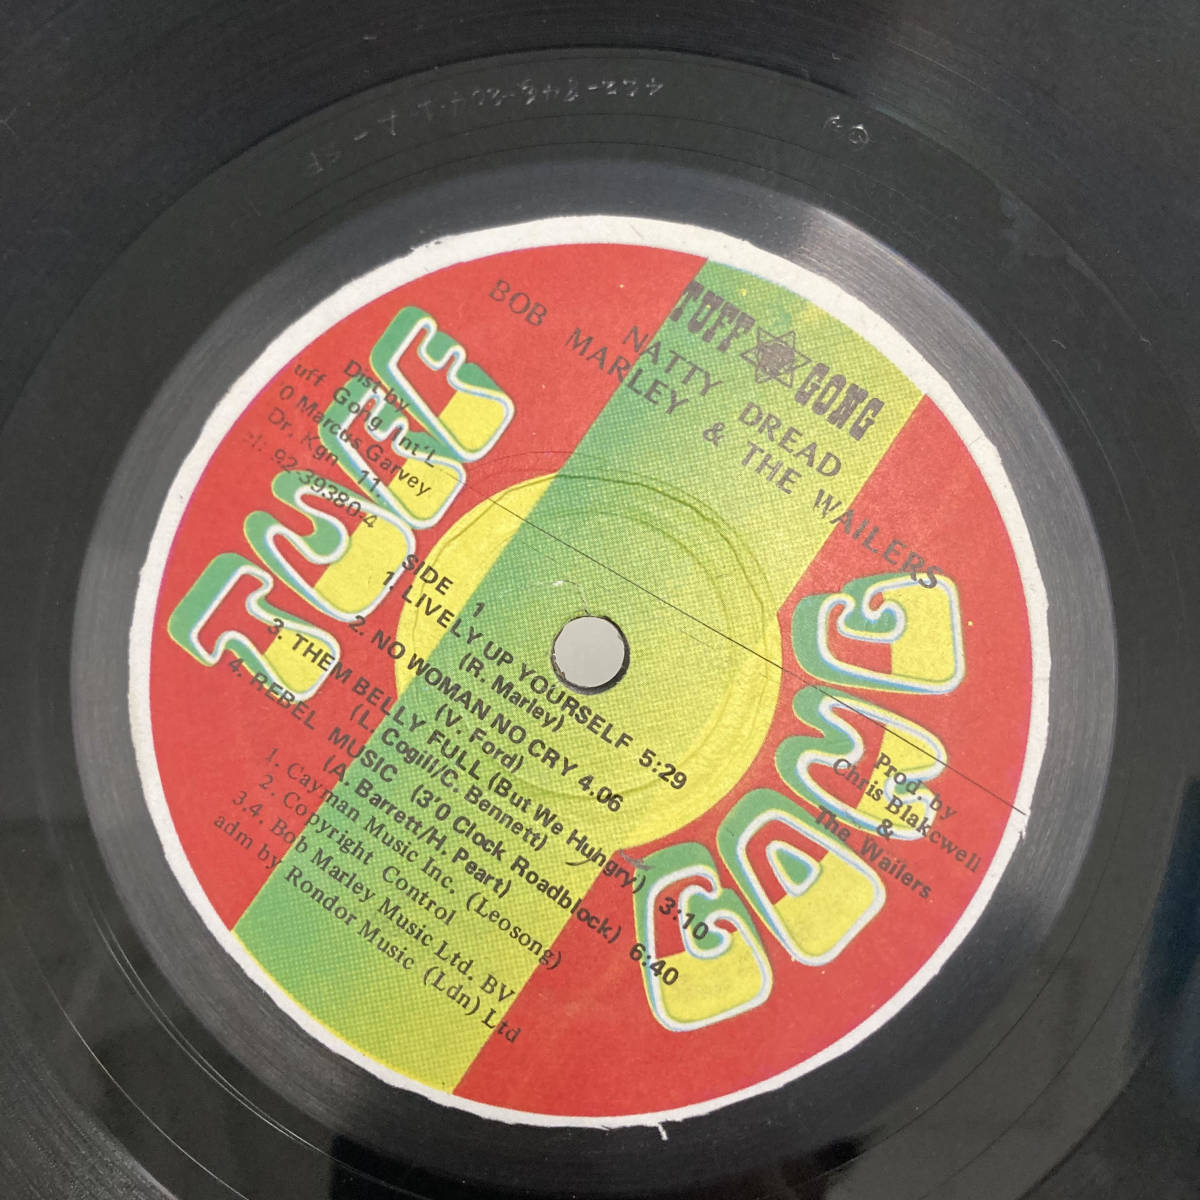 Bob Marley & The Wailers Natty Dread LP レコード ボブマーリー_画像4